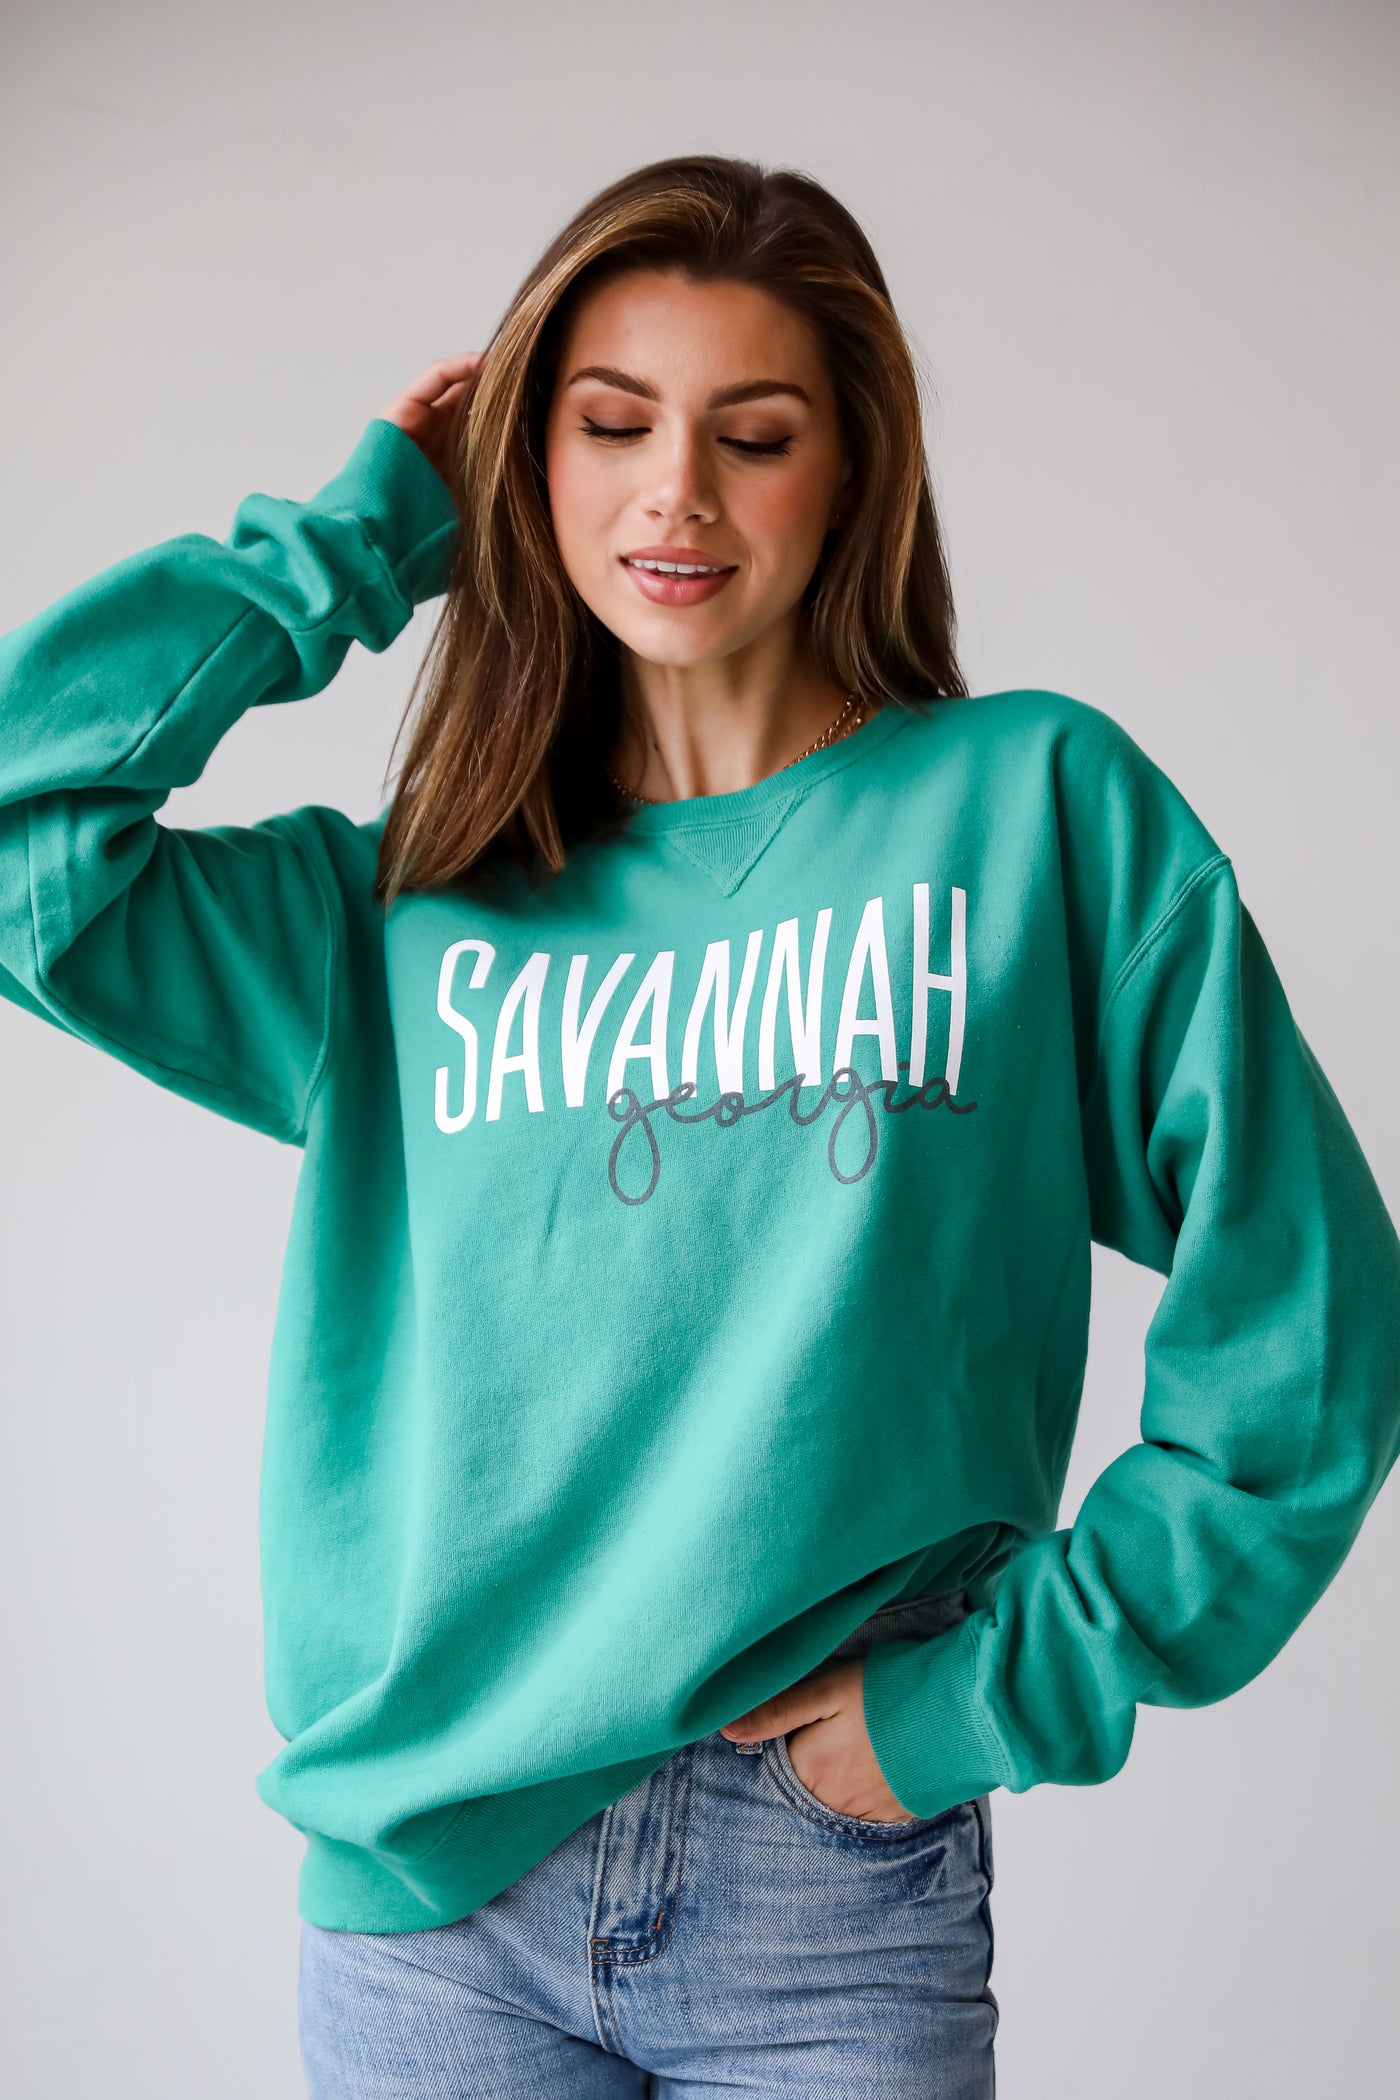 savannah ga sweatshirt